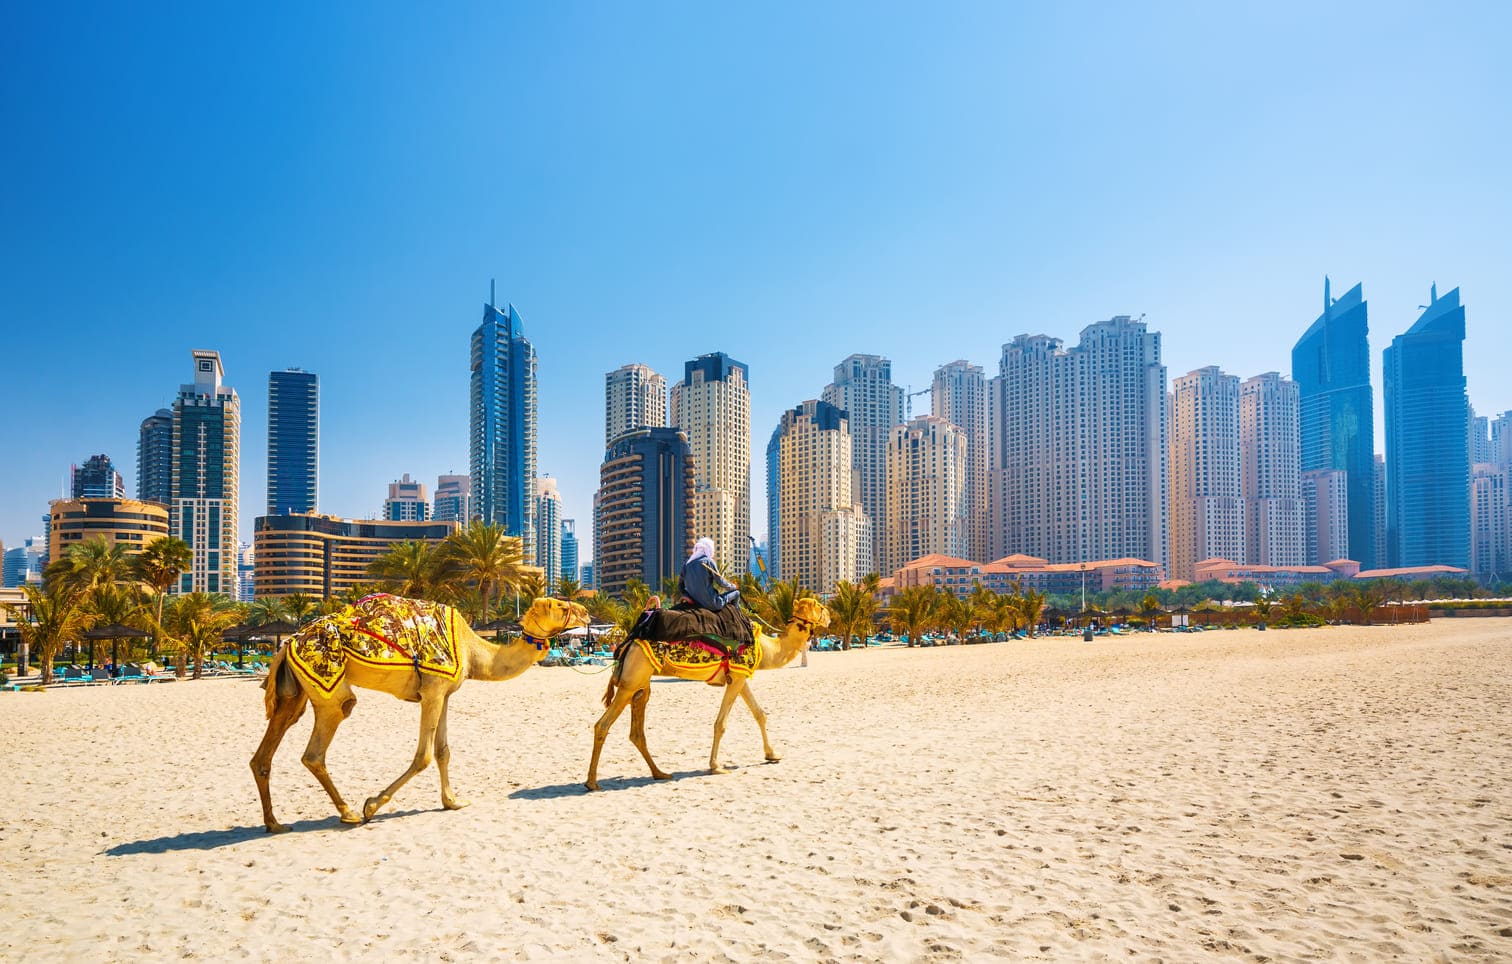 Dubai adopted digital assets regulation